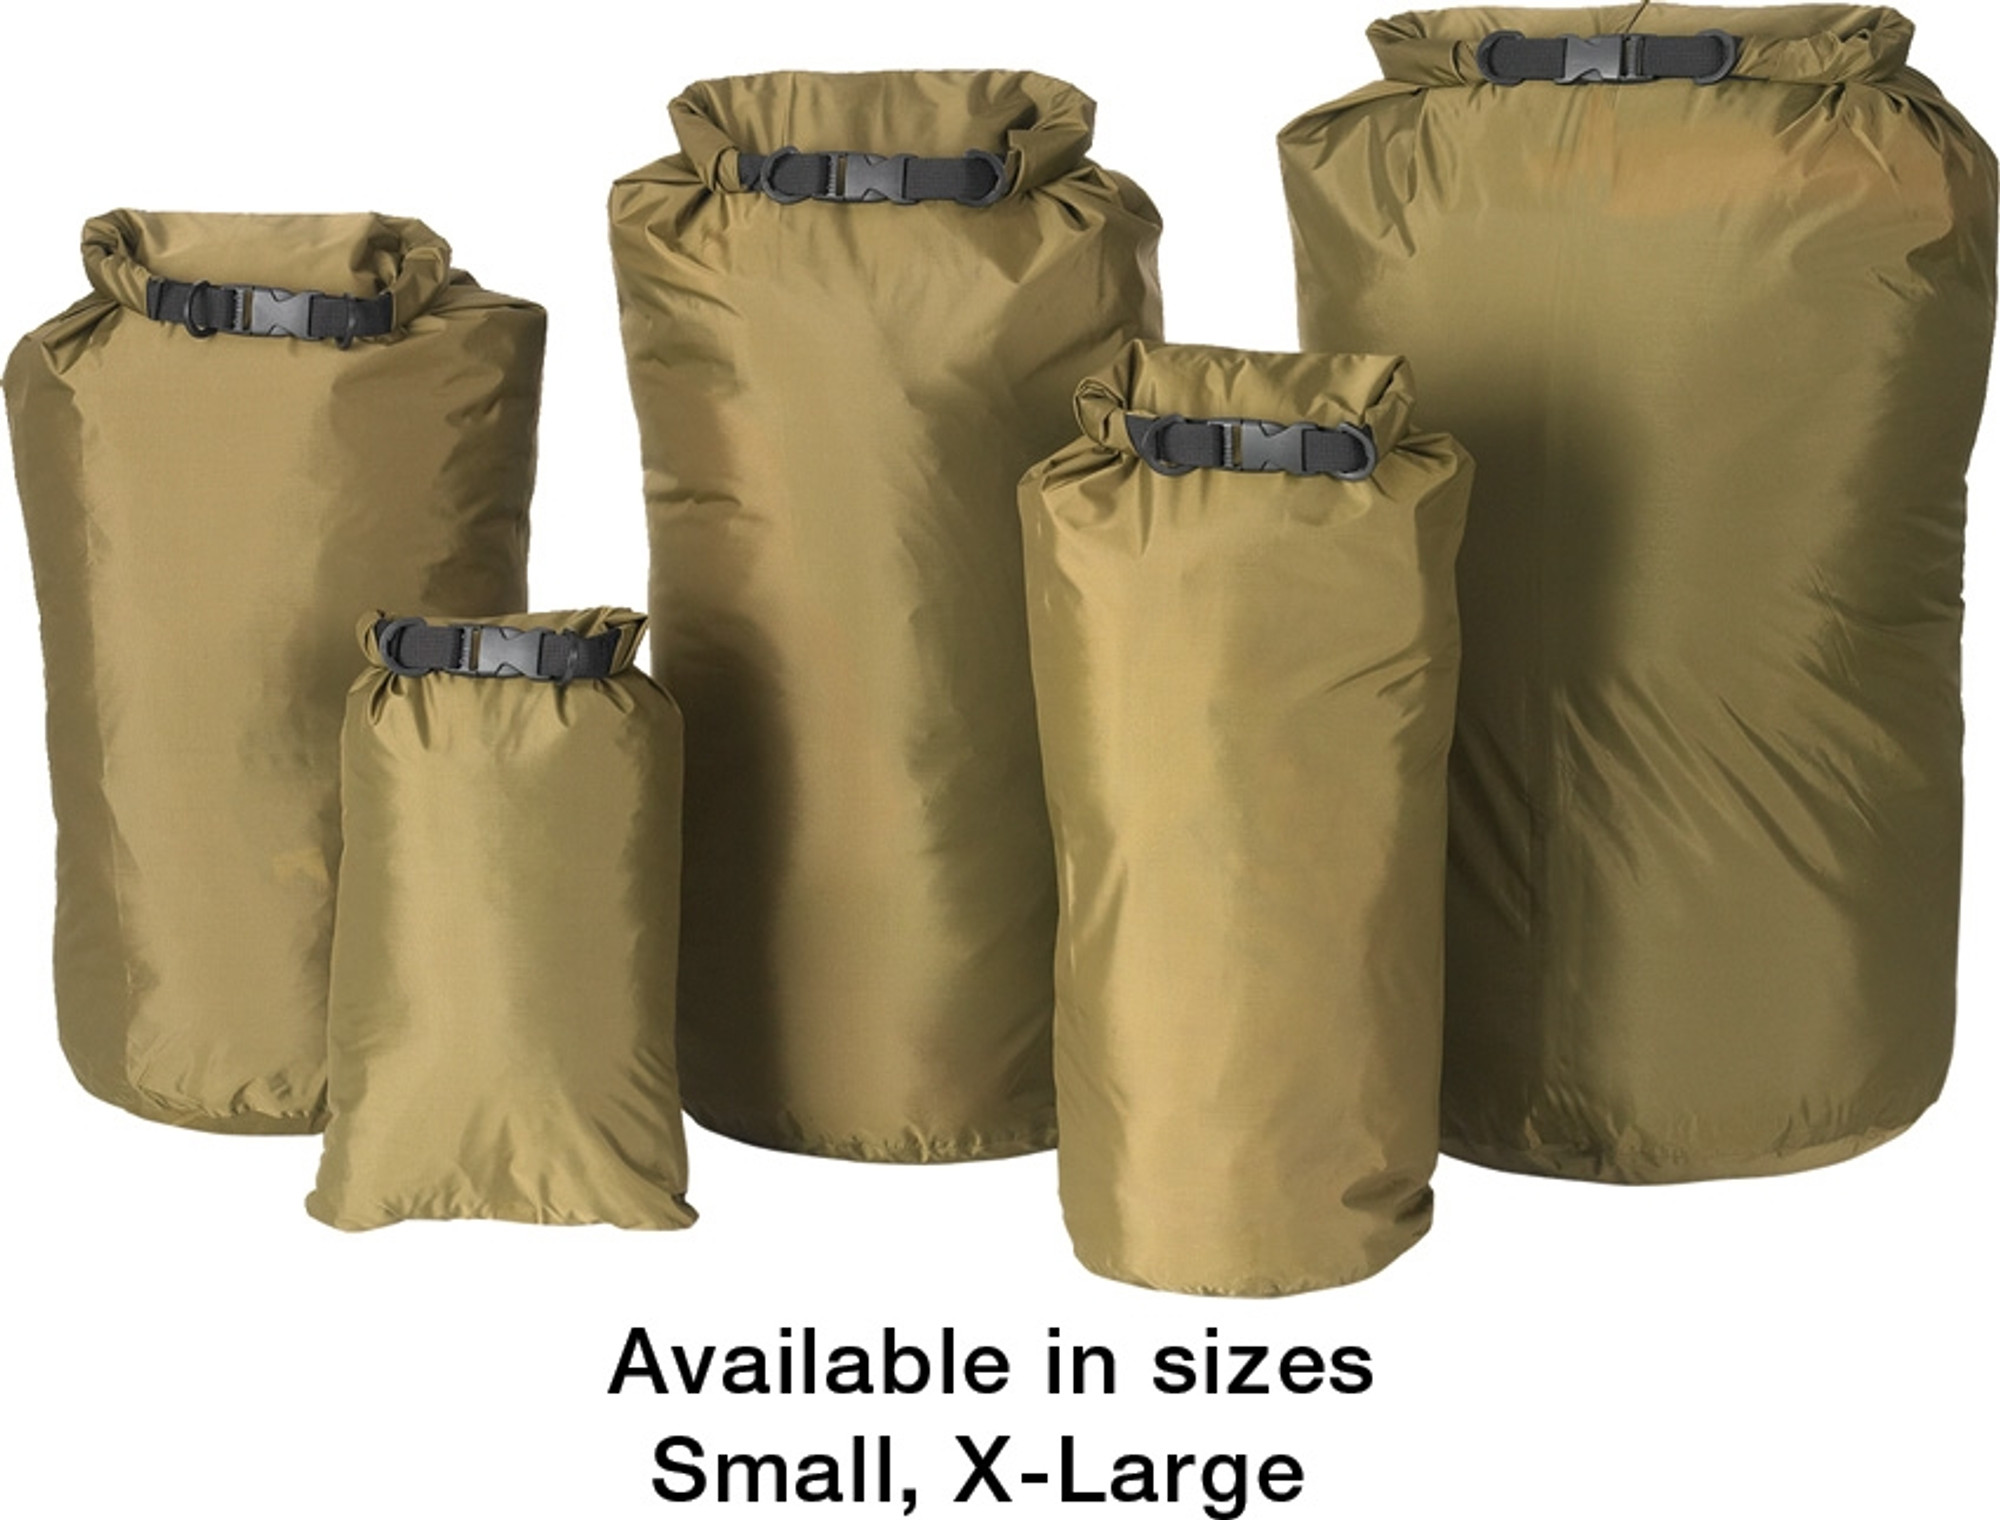 Dri-Sak Waterproof Bag - Small 